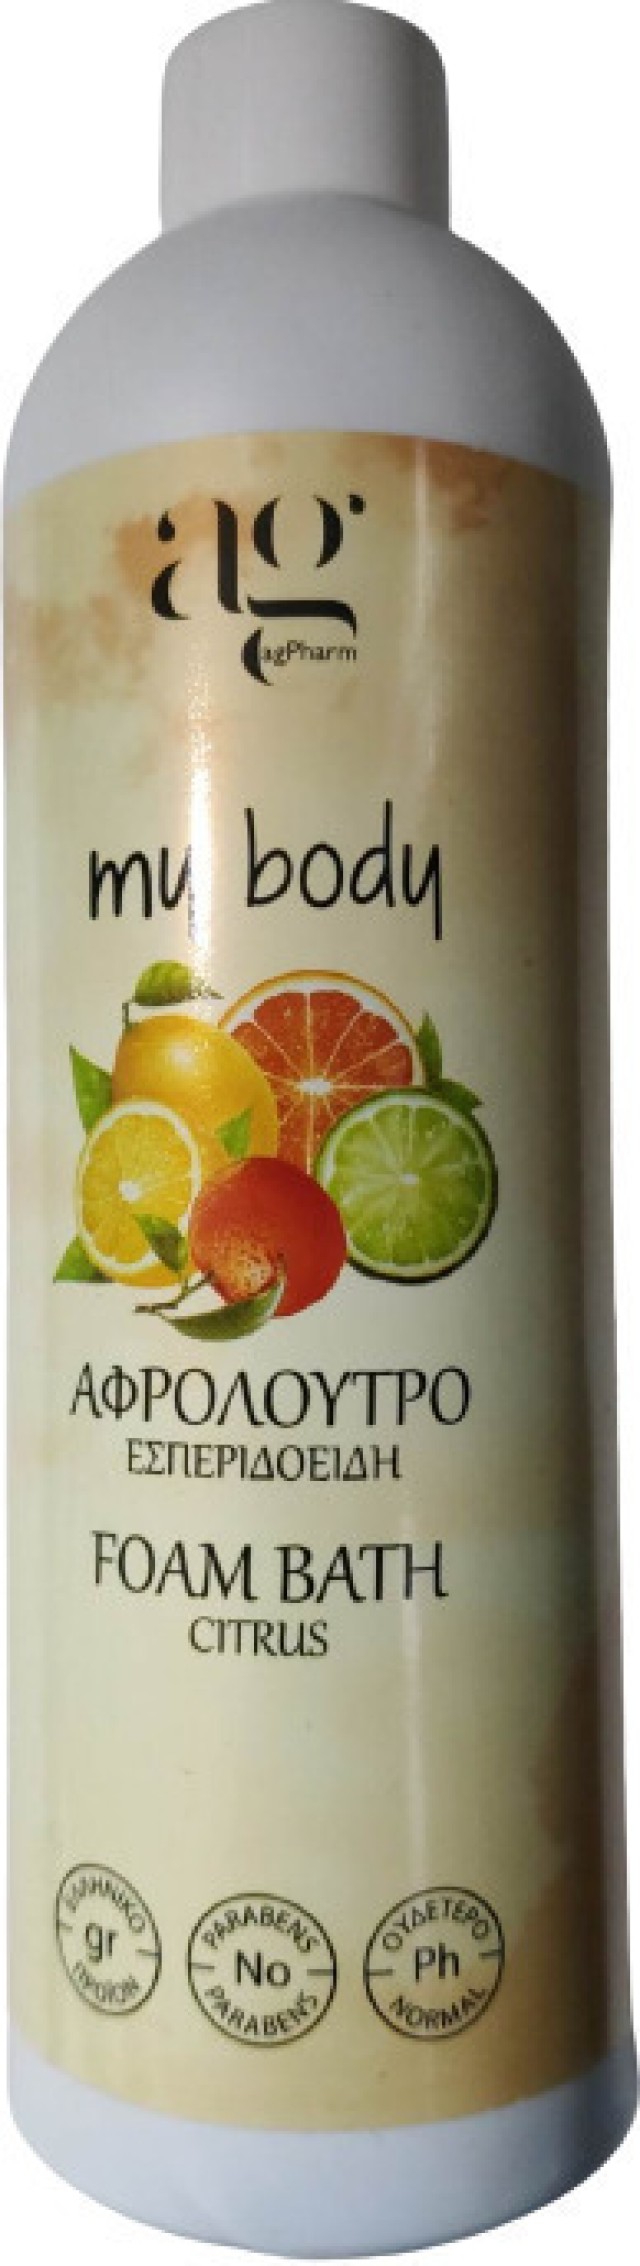 Ag Pharm my Body Foam Bath Citrus Ενυδατικό Αφρόλουτρο με Εσπεριδοειδή 300ml